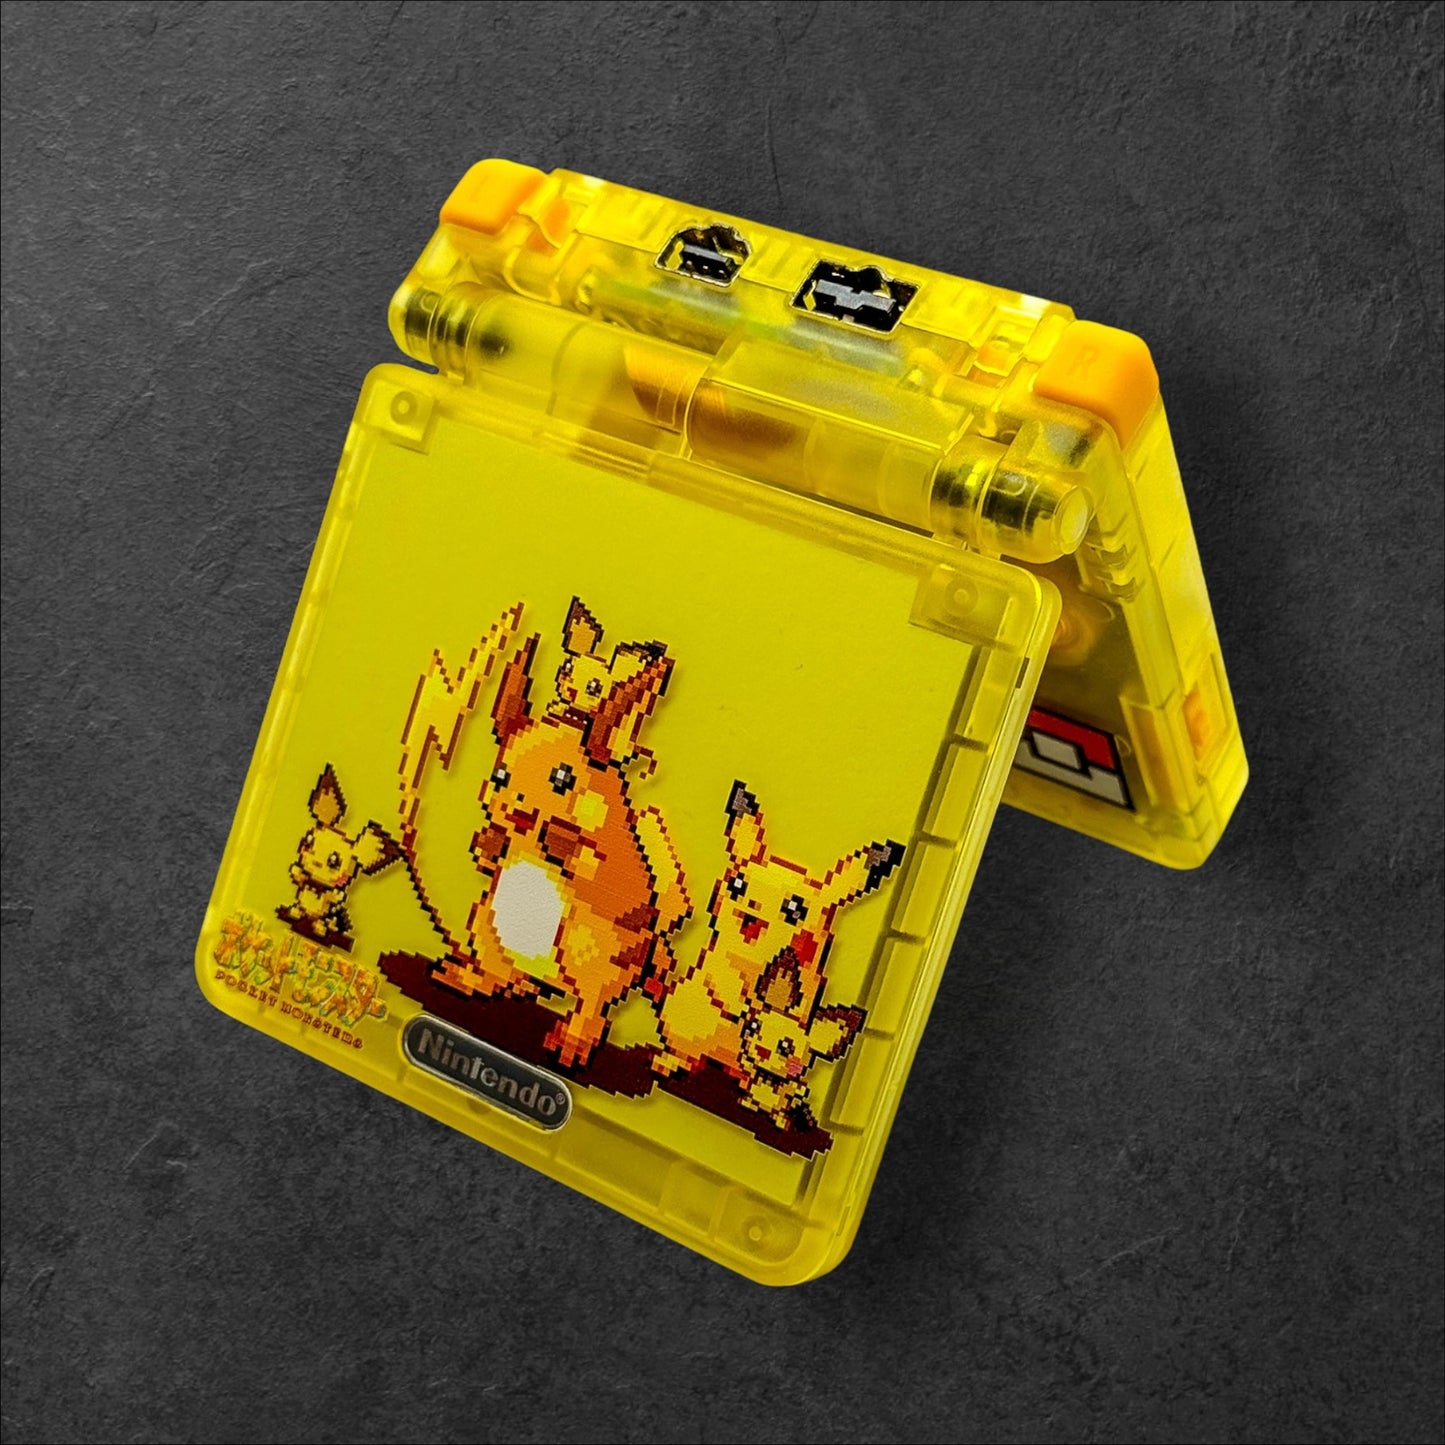 Nintendo Game Boy Advance SP - Pixel Pikachu’s Evolution Edition